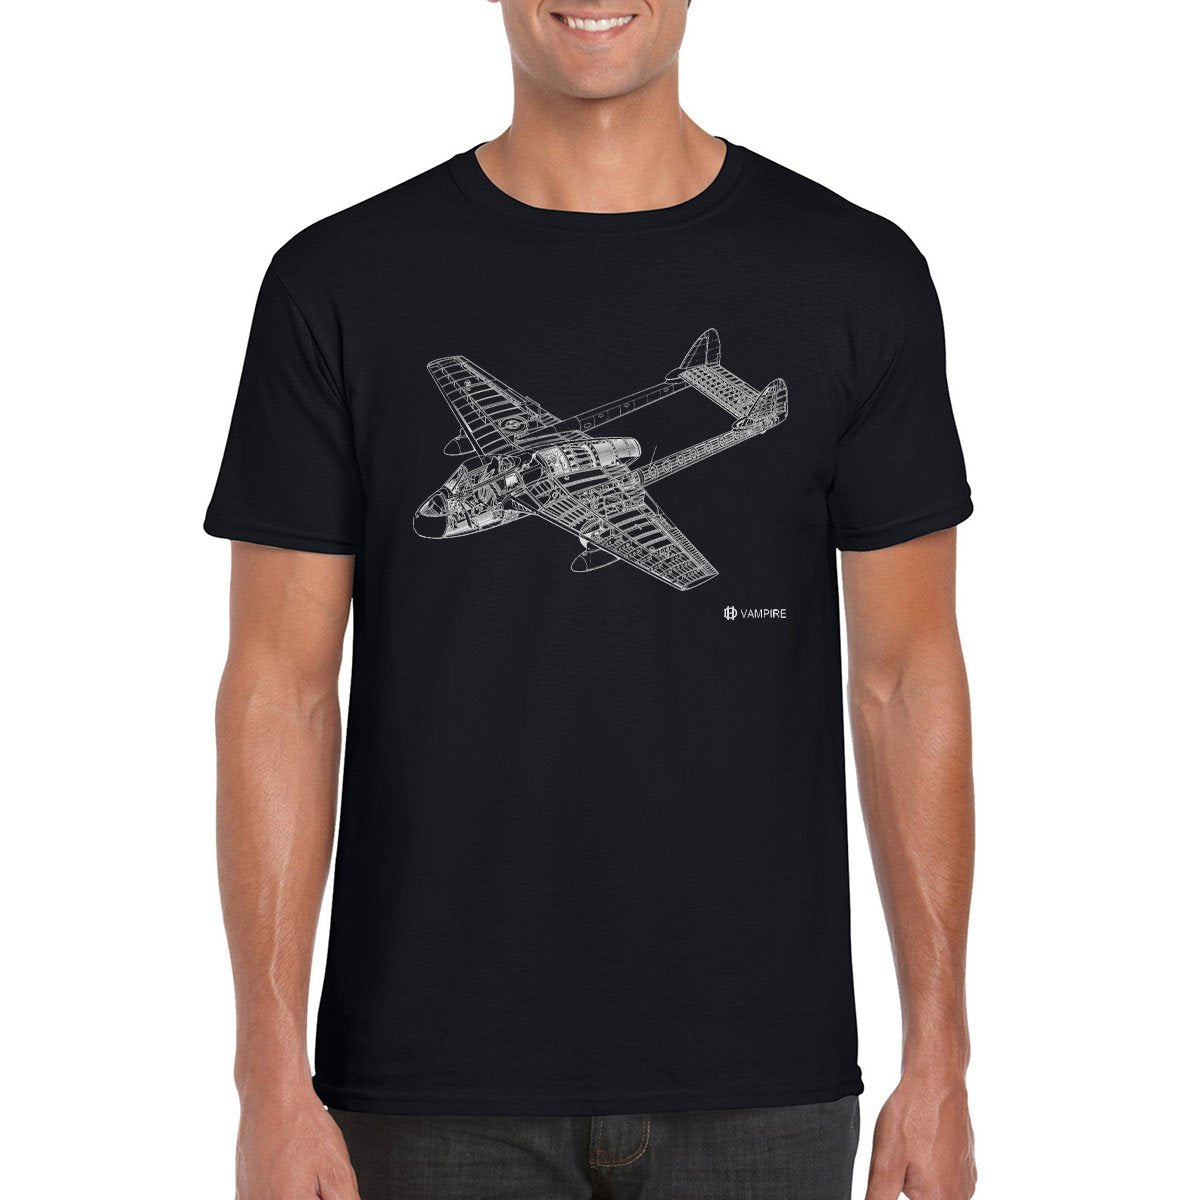 De Havilland Vampire Cutaway T-Shirt